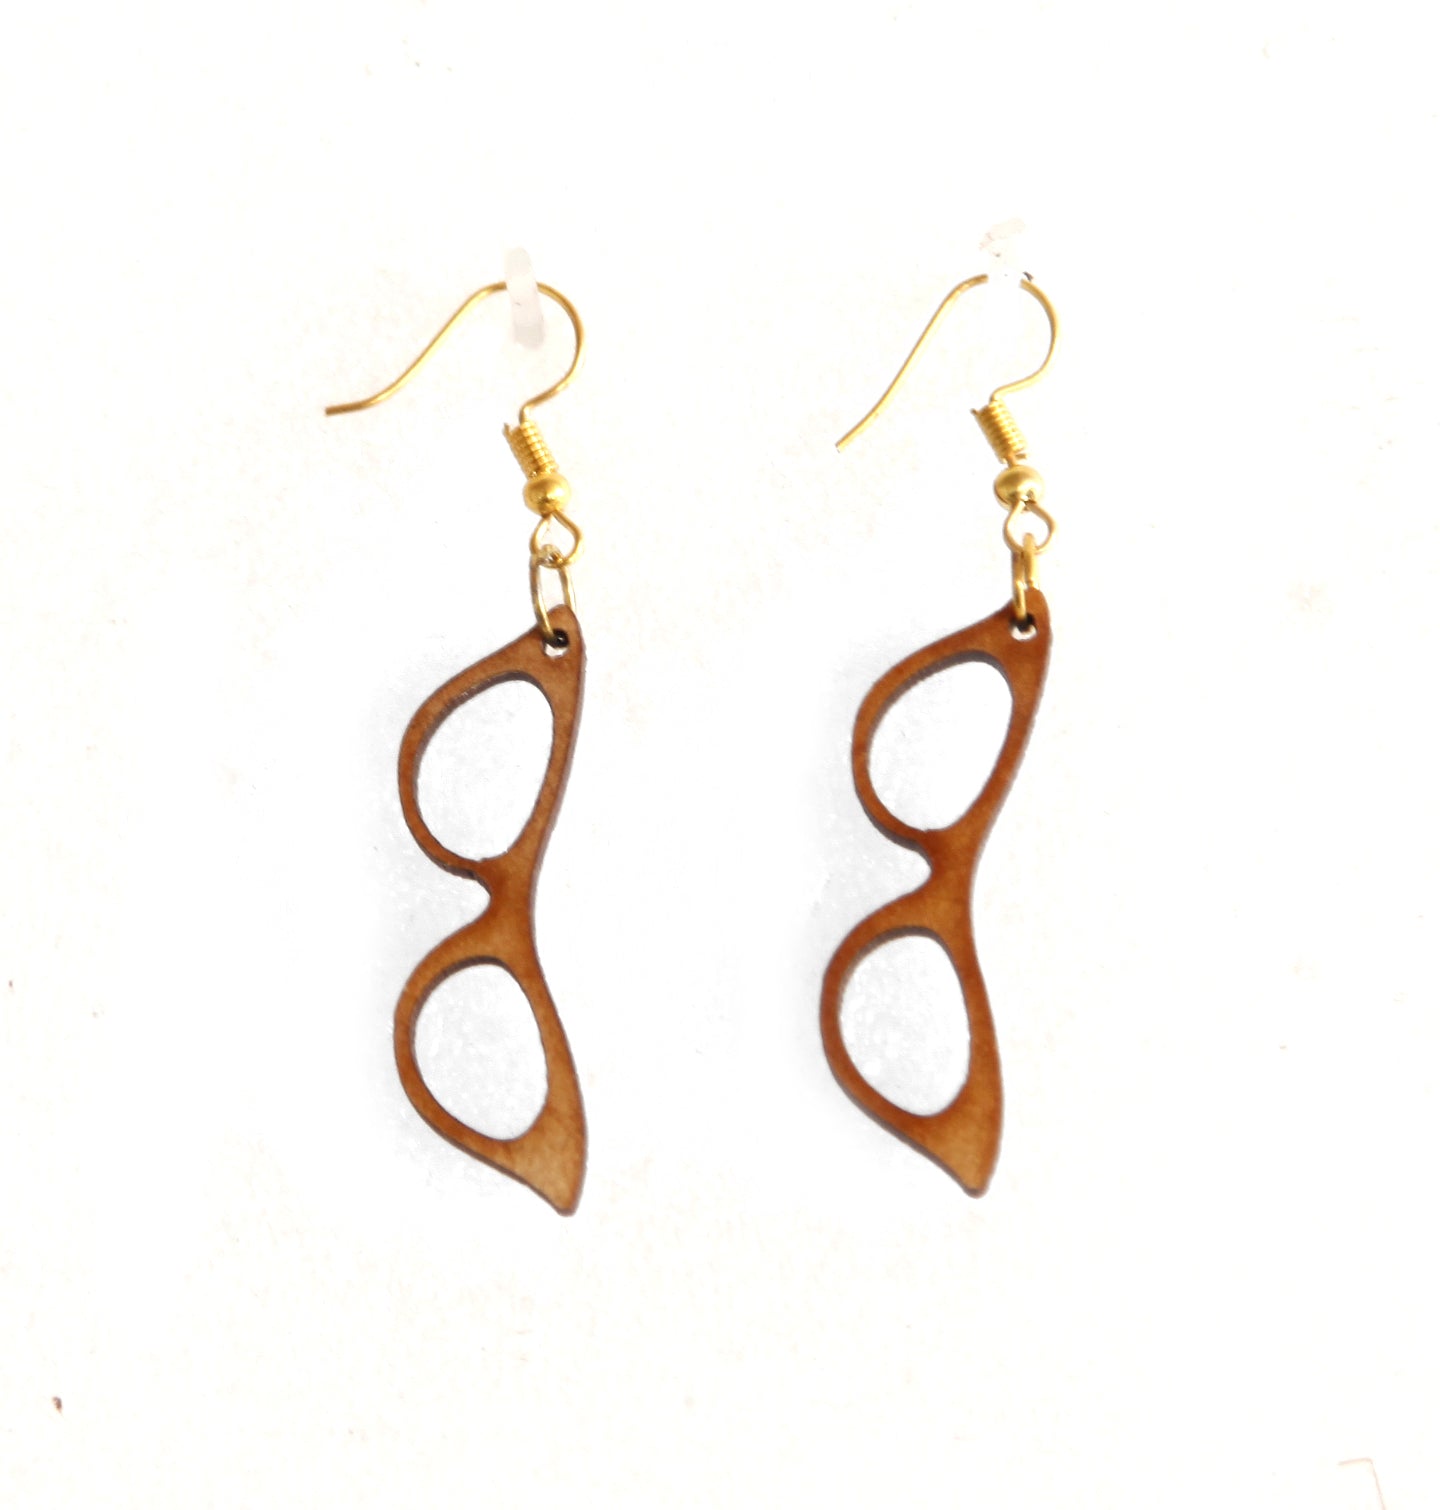 Natural Beauty: Handmade Wooden Earrings Set Of 3